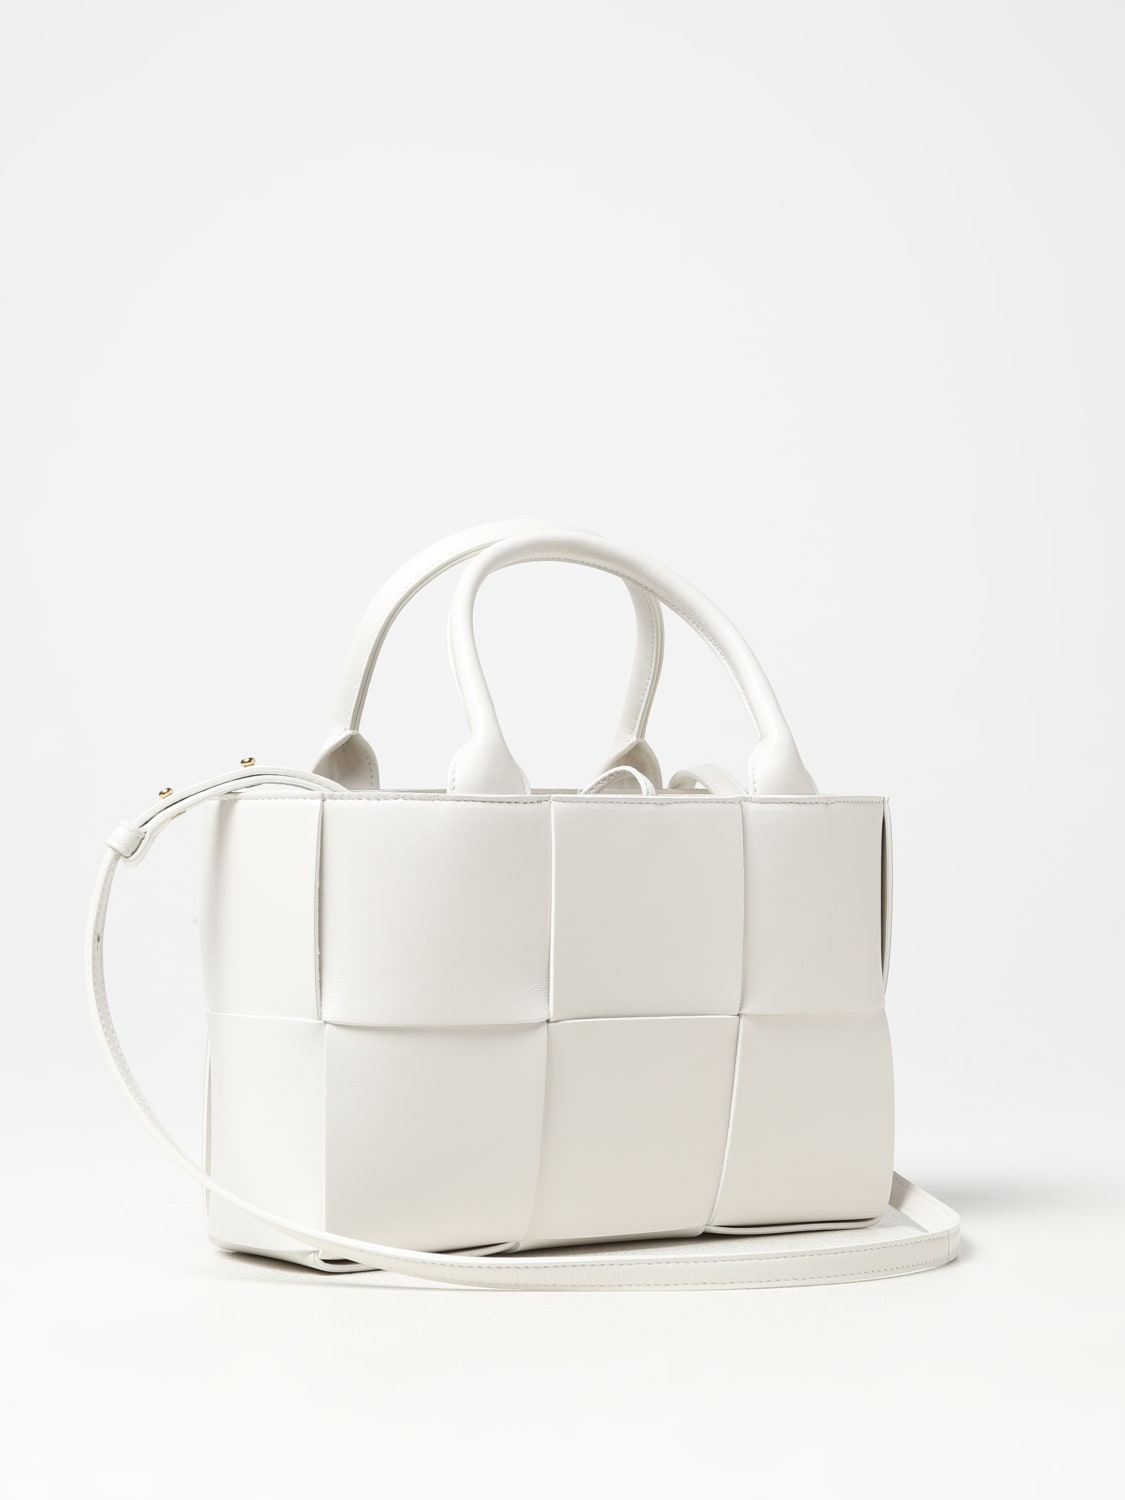 BOTTEGA VENETA: handbag for woman - White | Bottega Veneta handbag ...